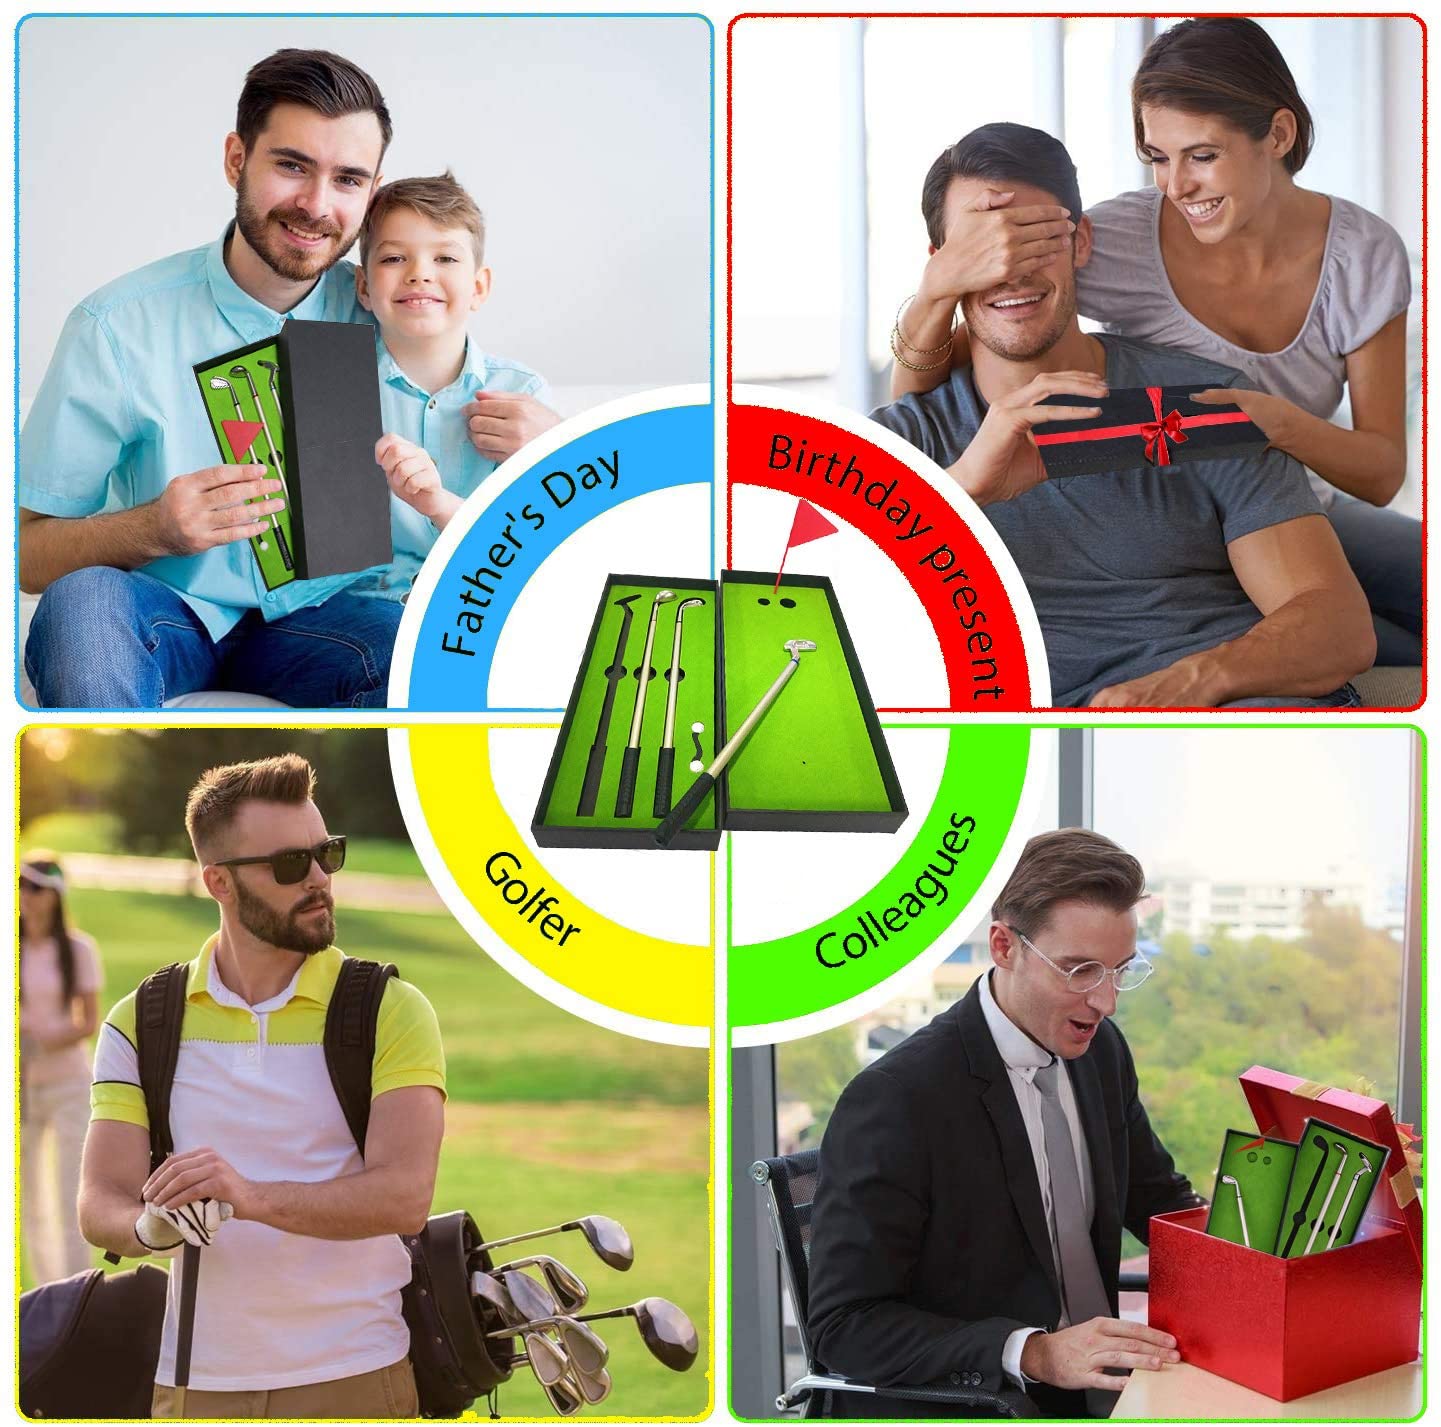 Golf Pen Set,Desktop Goft Mini Groene Driving Range Met Golf Club Pennen Ballen En Vlag